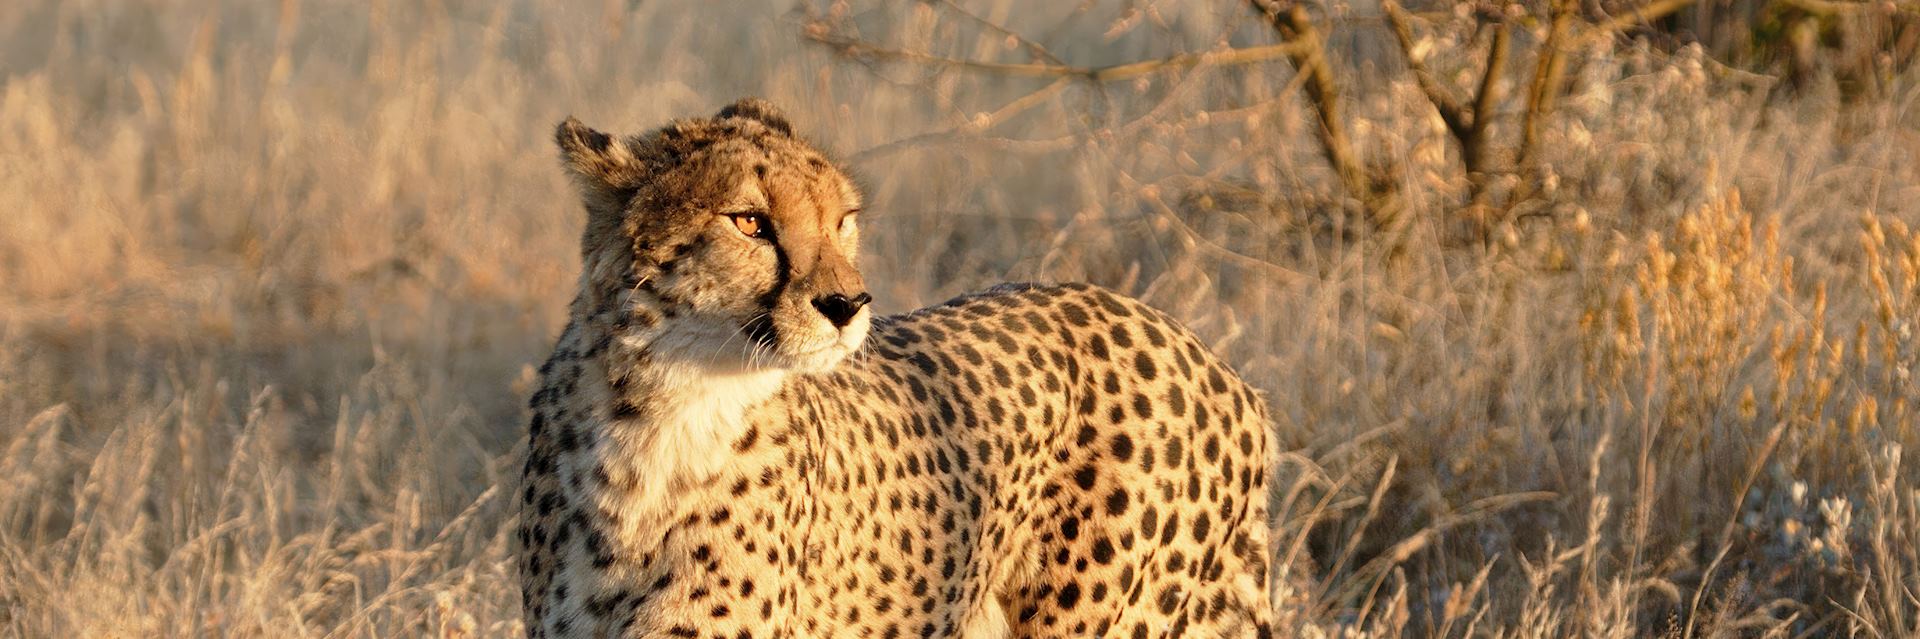 Cheetah in Etosha National Park